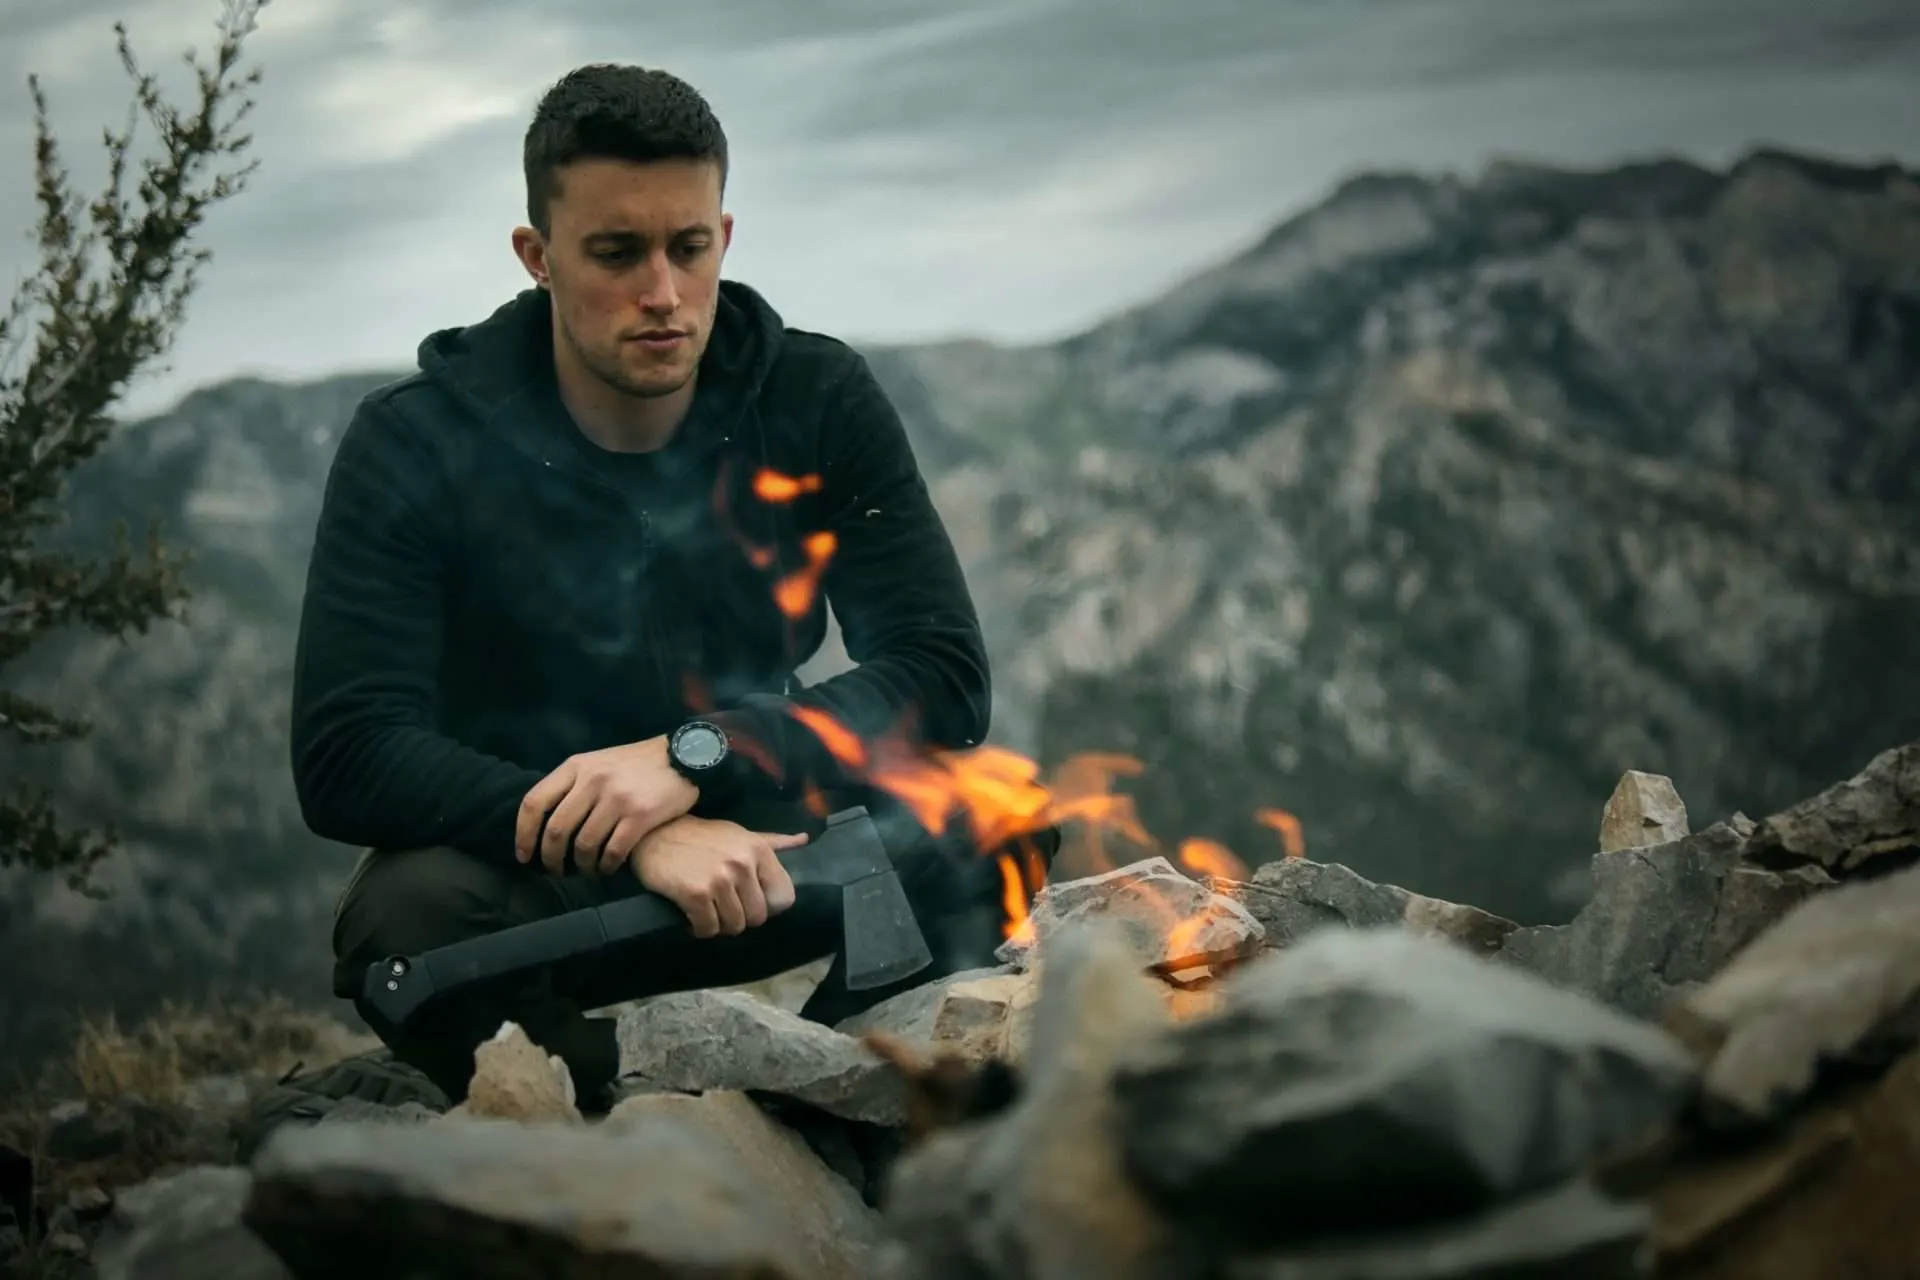 Male survivalist camper sitting by fire.